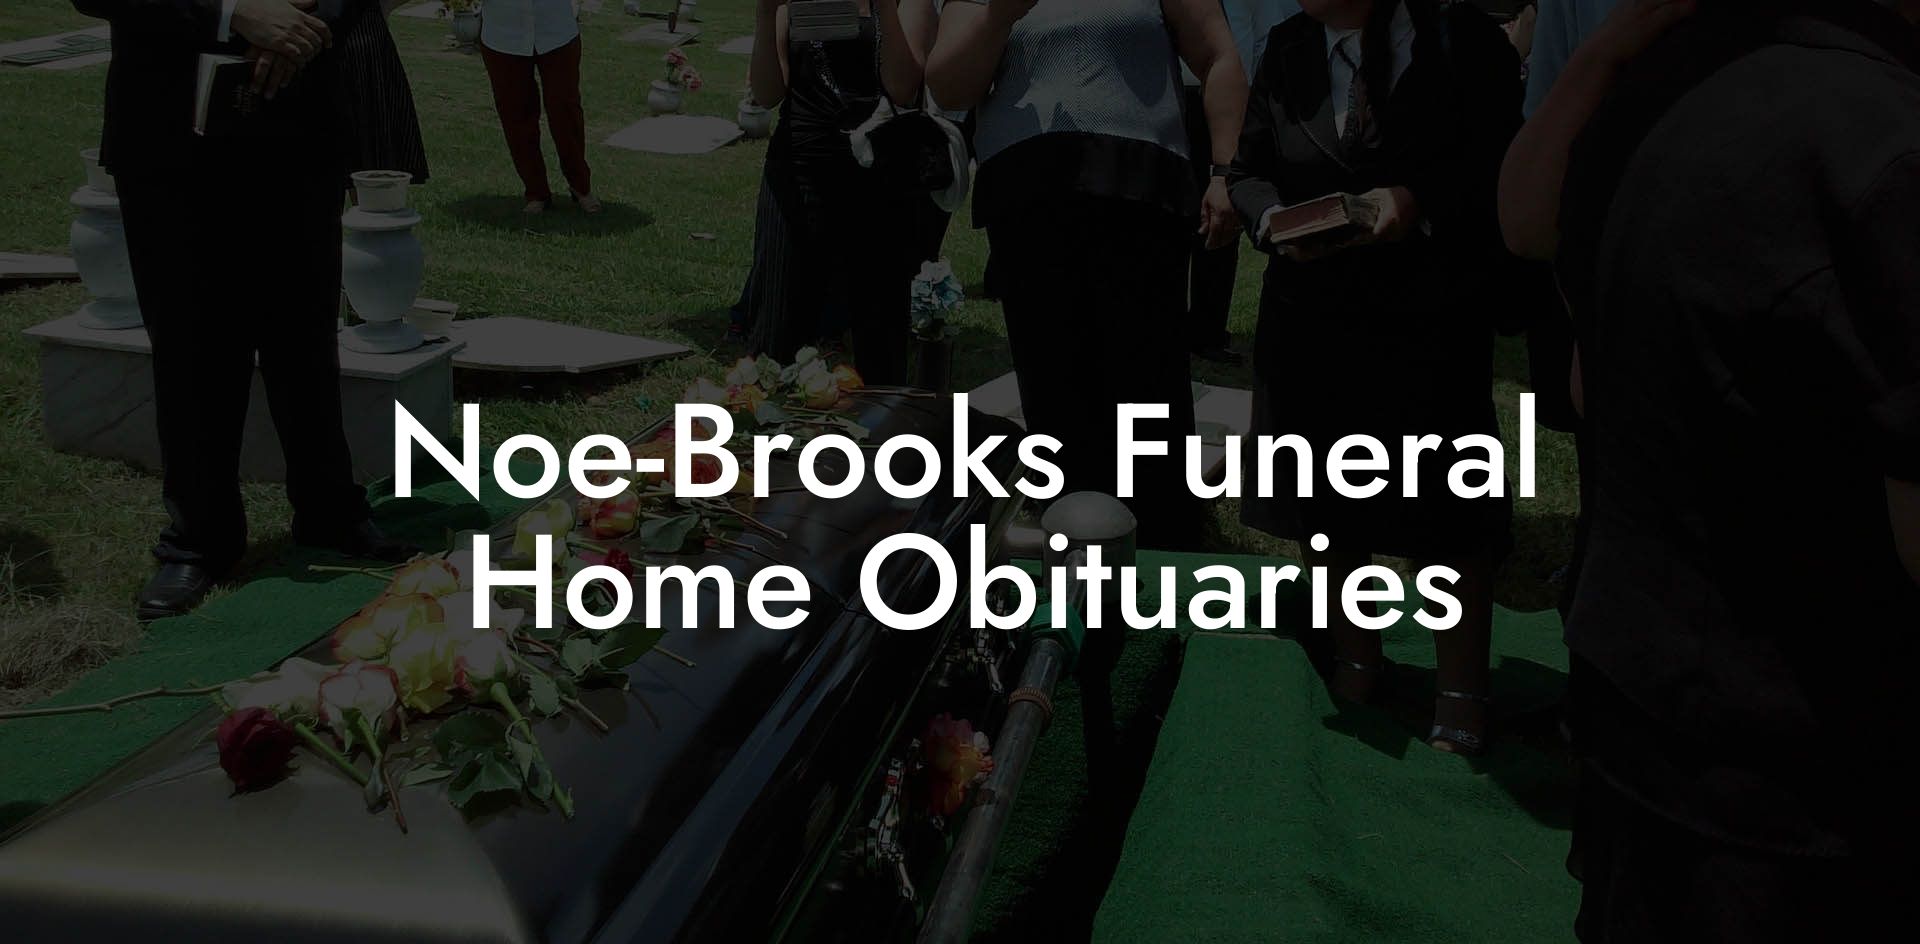 Noe-Brooks Funeral Home Obituaries